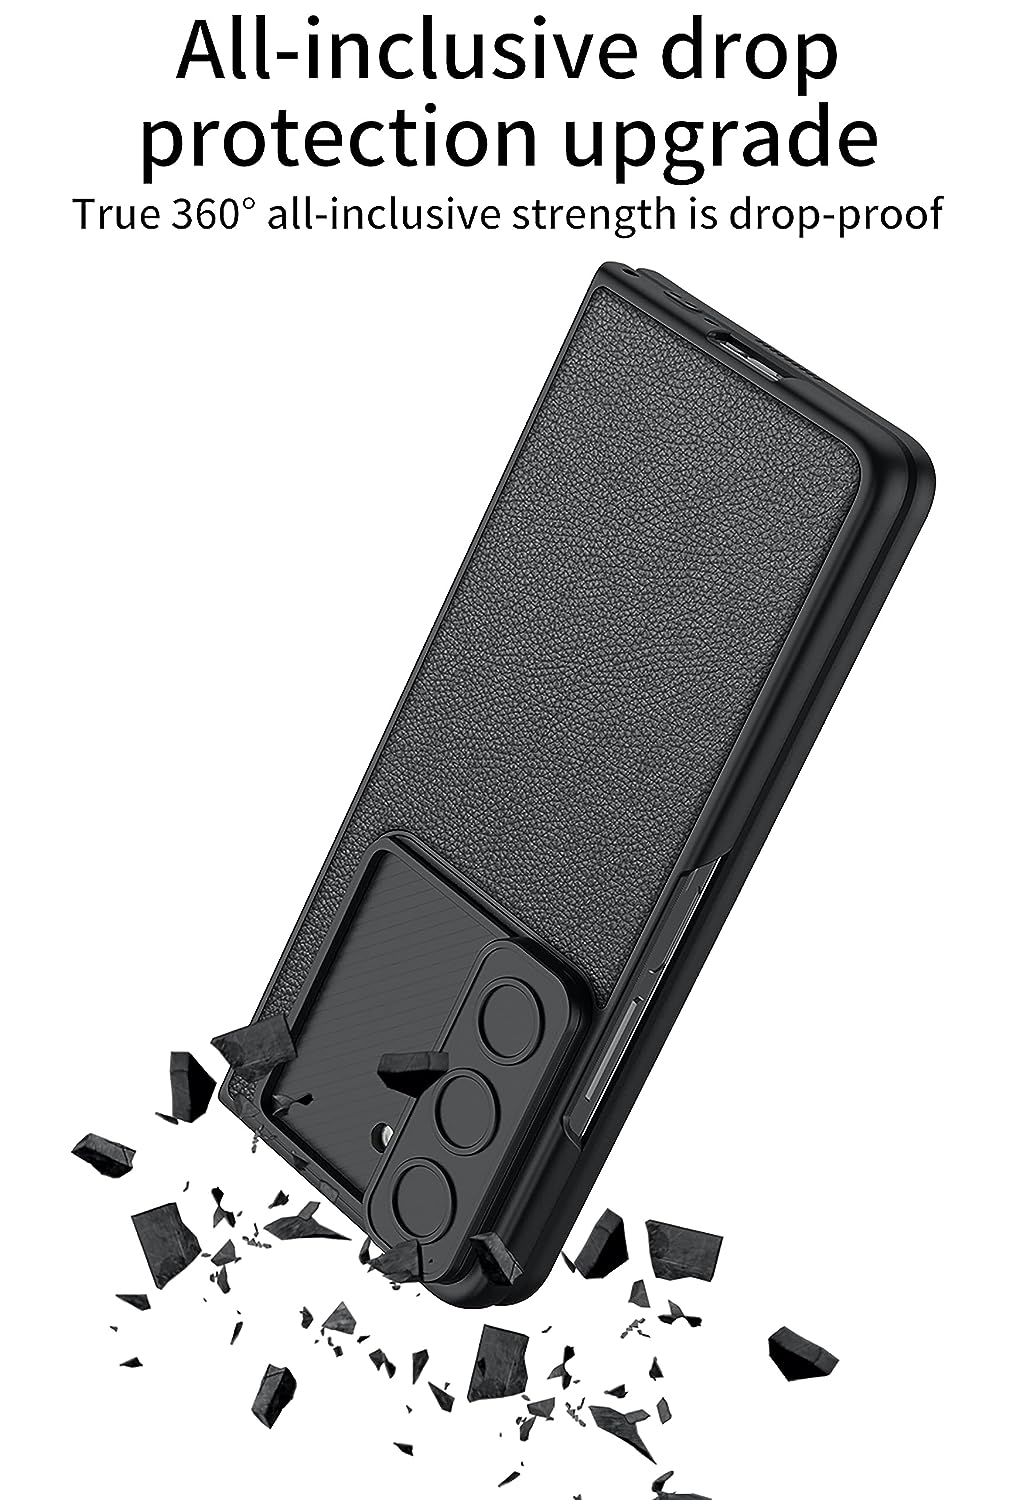 Samsung Galaxy Z Fold 5 P.U Leather with Camera Shutter Case-Black